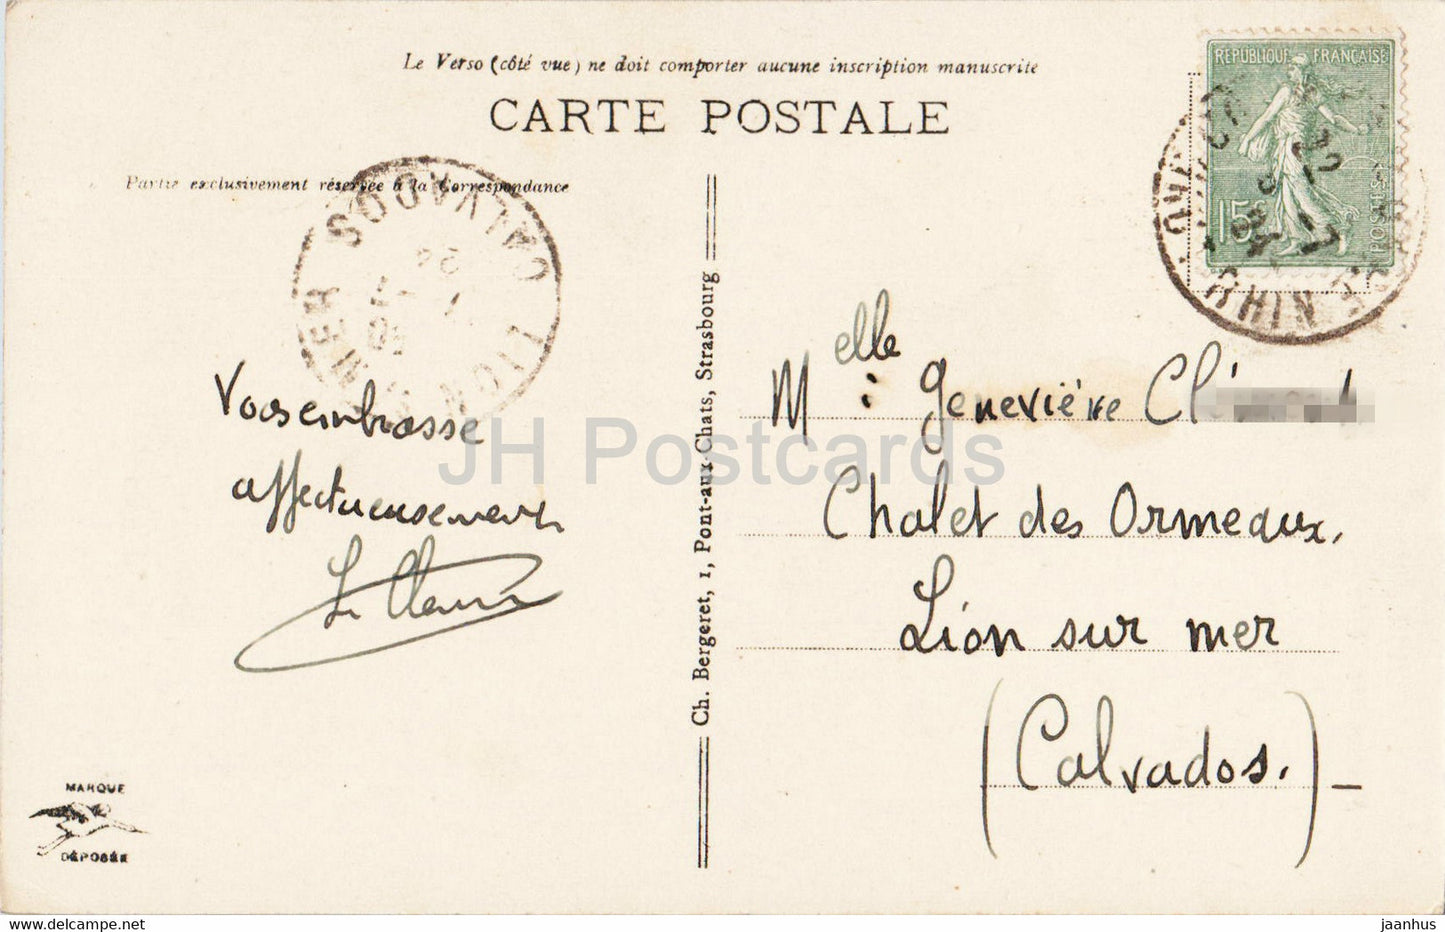 Colmar - Maison des Tetes - 11 - old postcard - 1924 - France - used